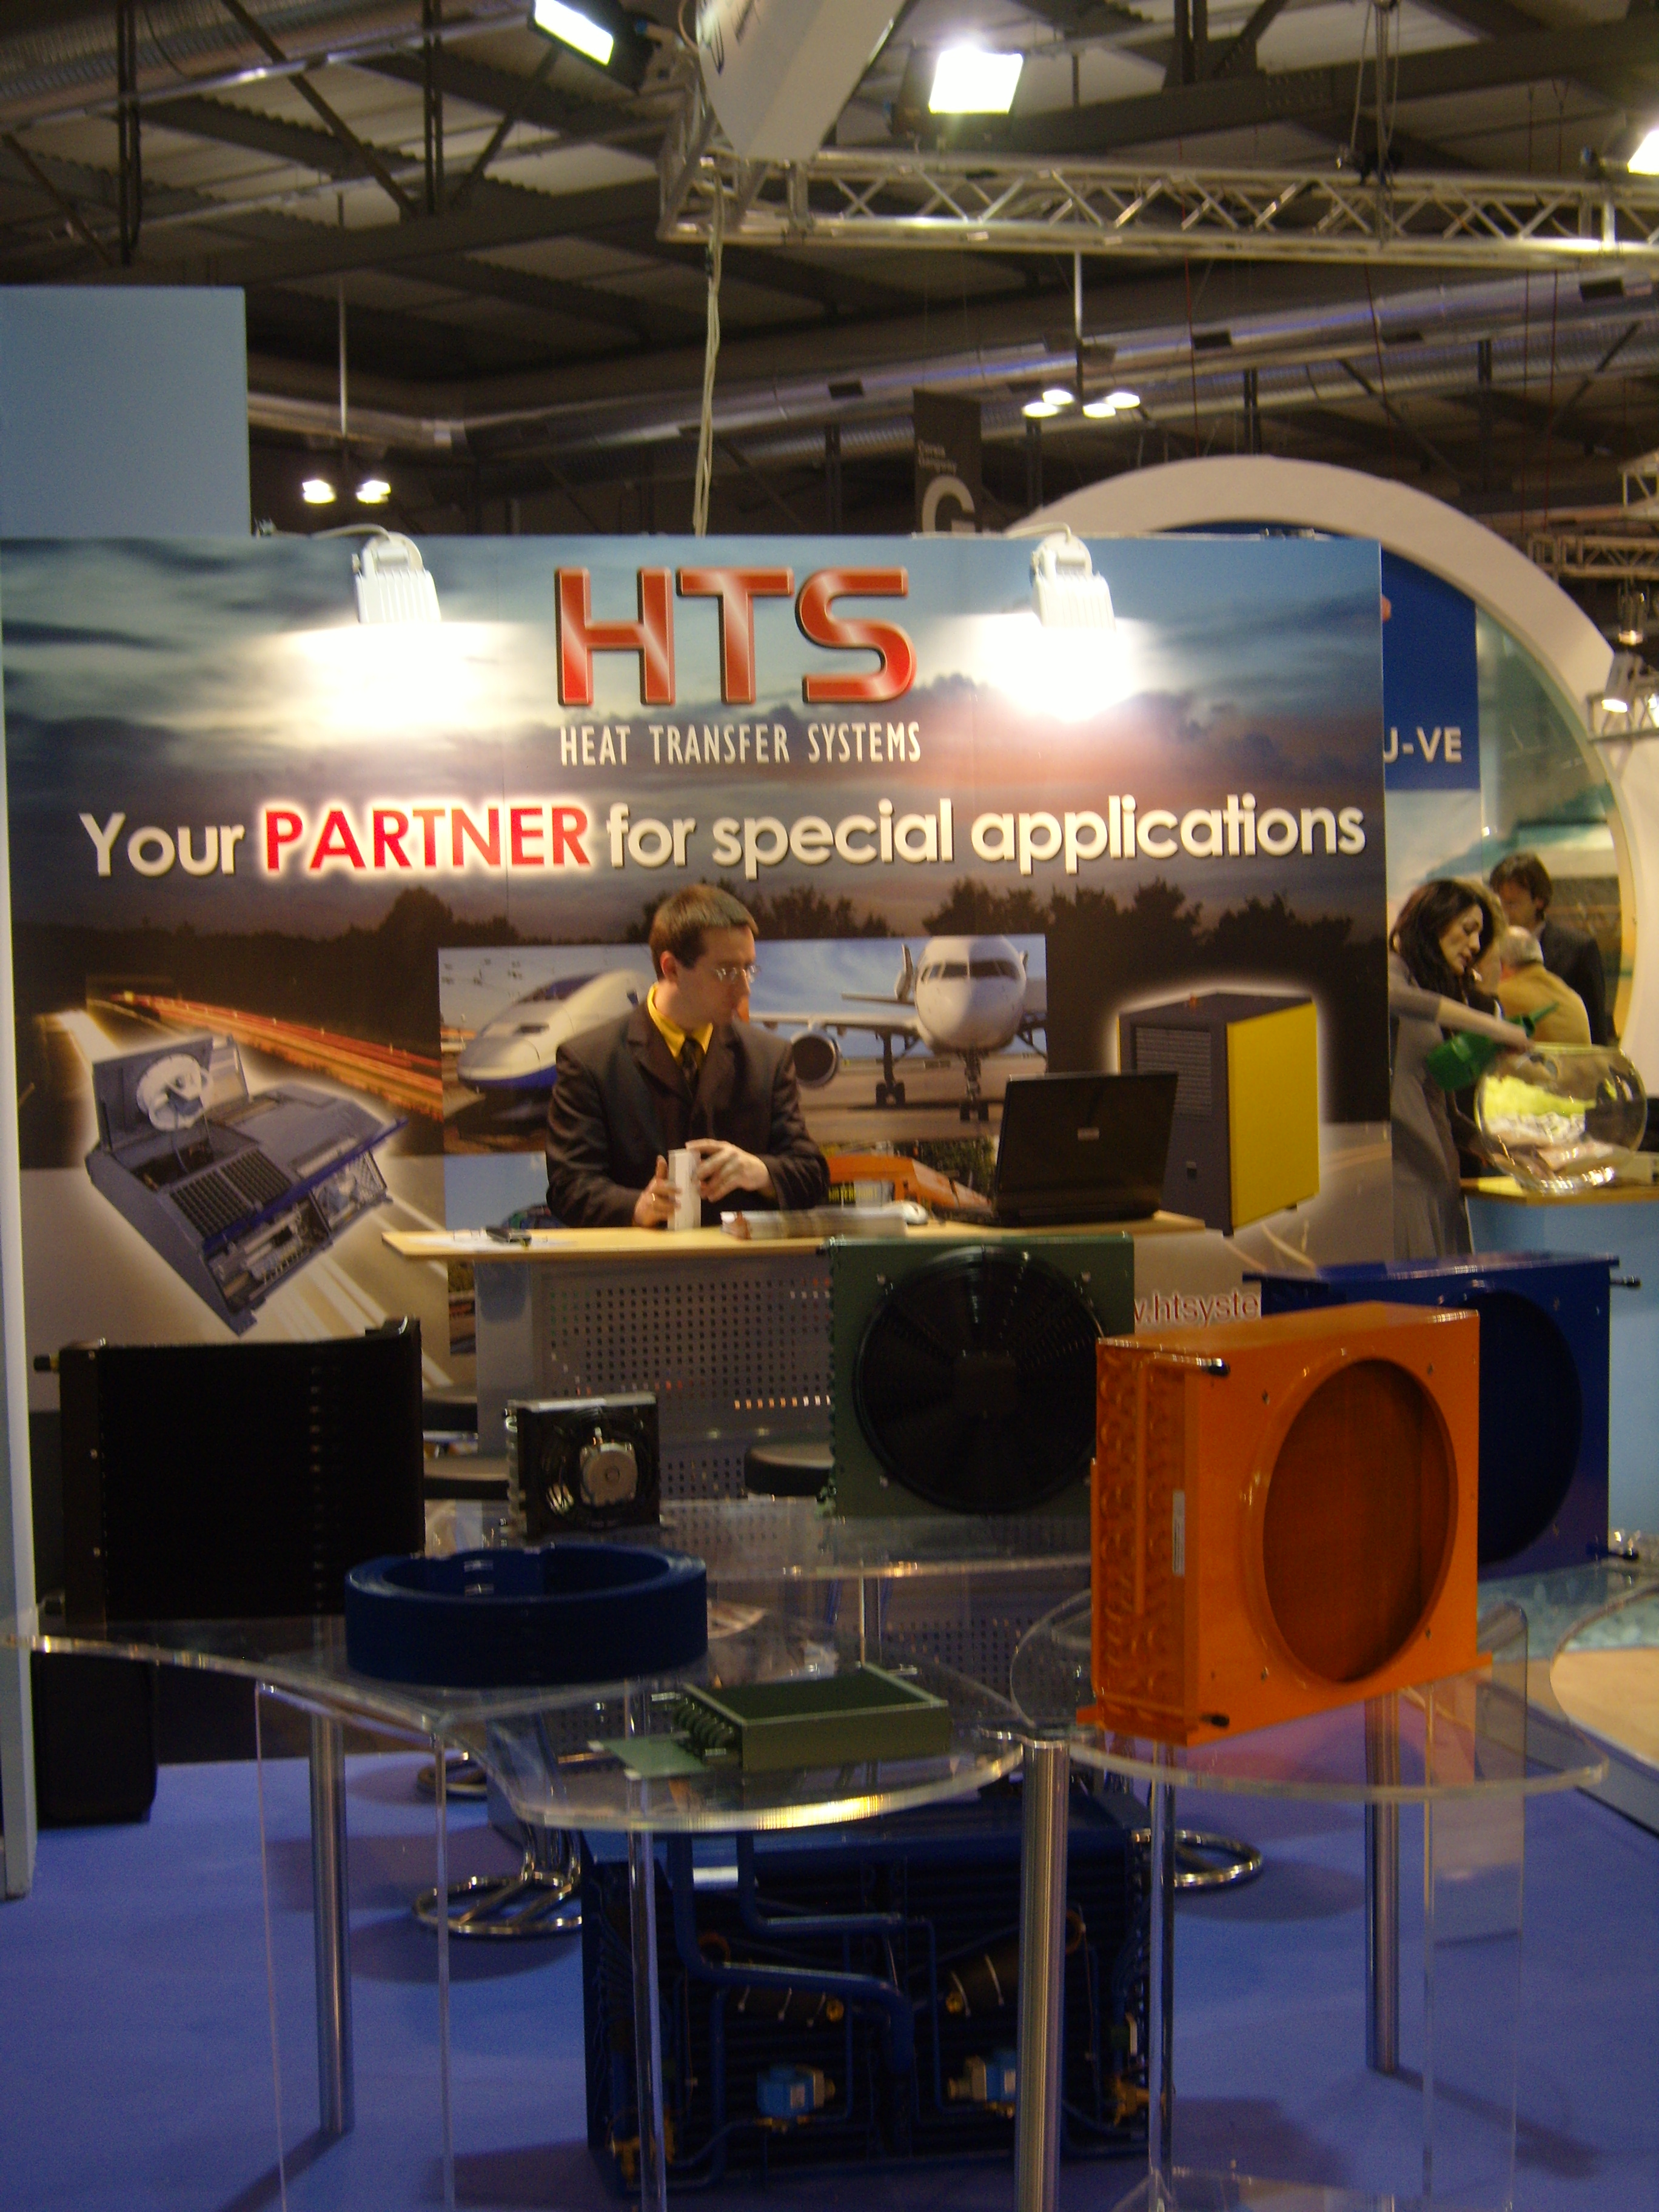 HTS - Heat Transfer Systems